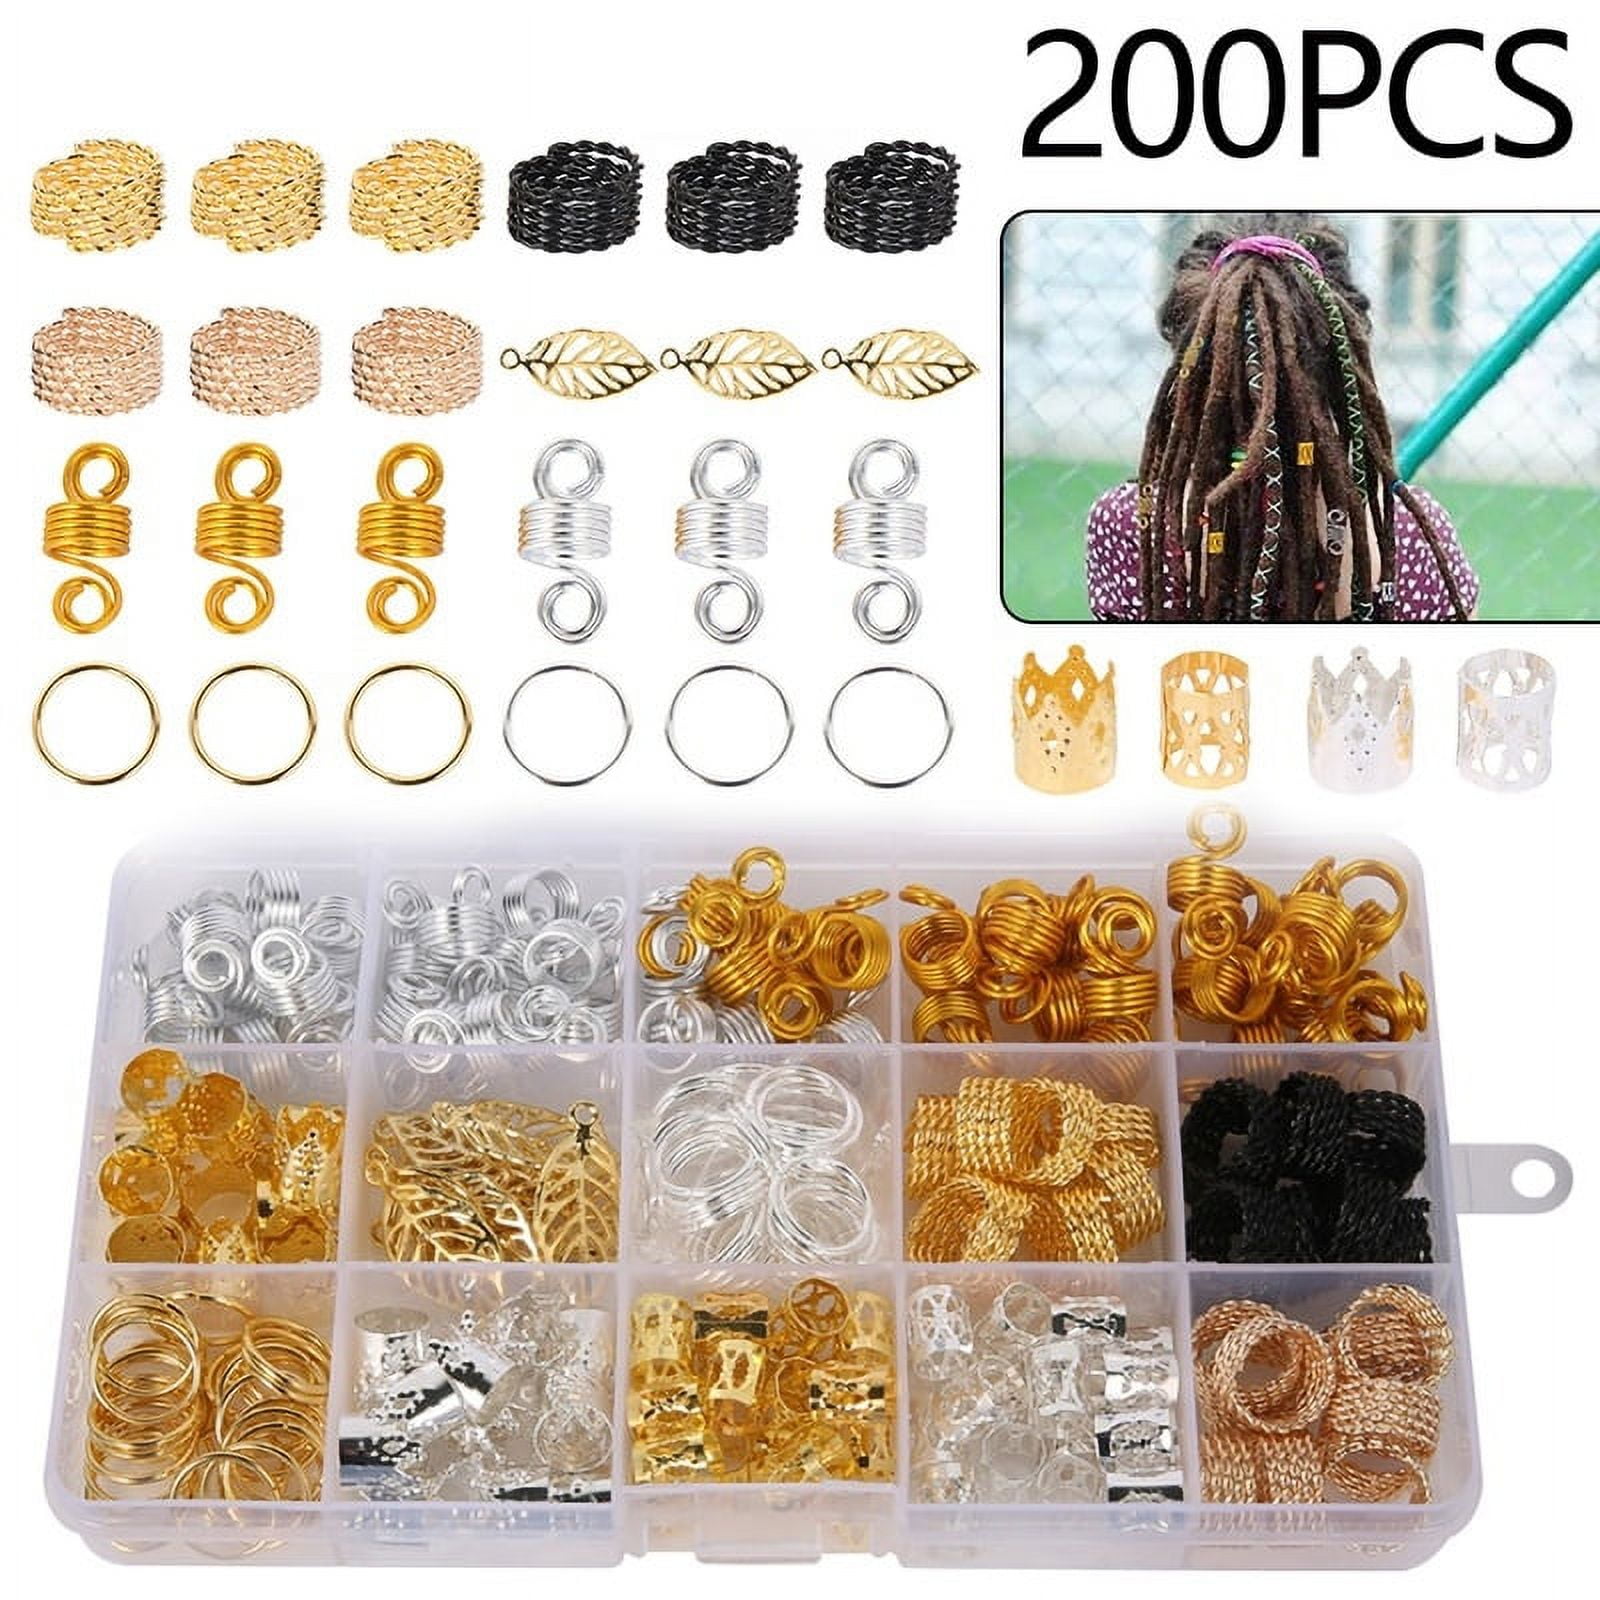 Dioche Hair Beads,Dreadlocks Hair Beads,365pcs Hair Dreadlocks Colorful  Hair Braiding Beads DIY Hair Beard Decoration Accessories